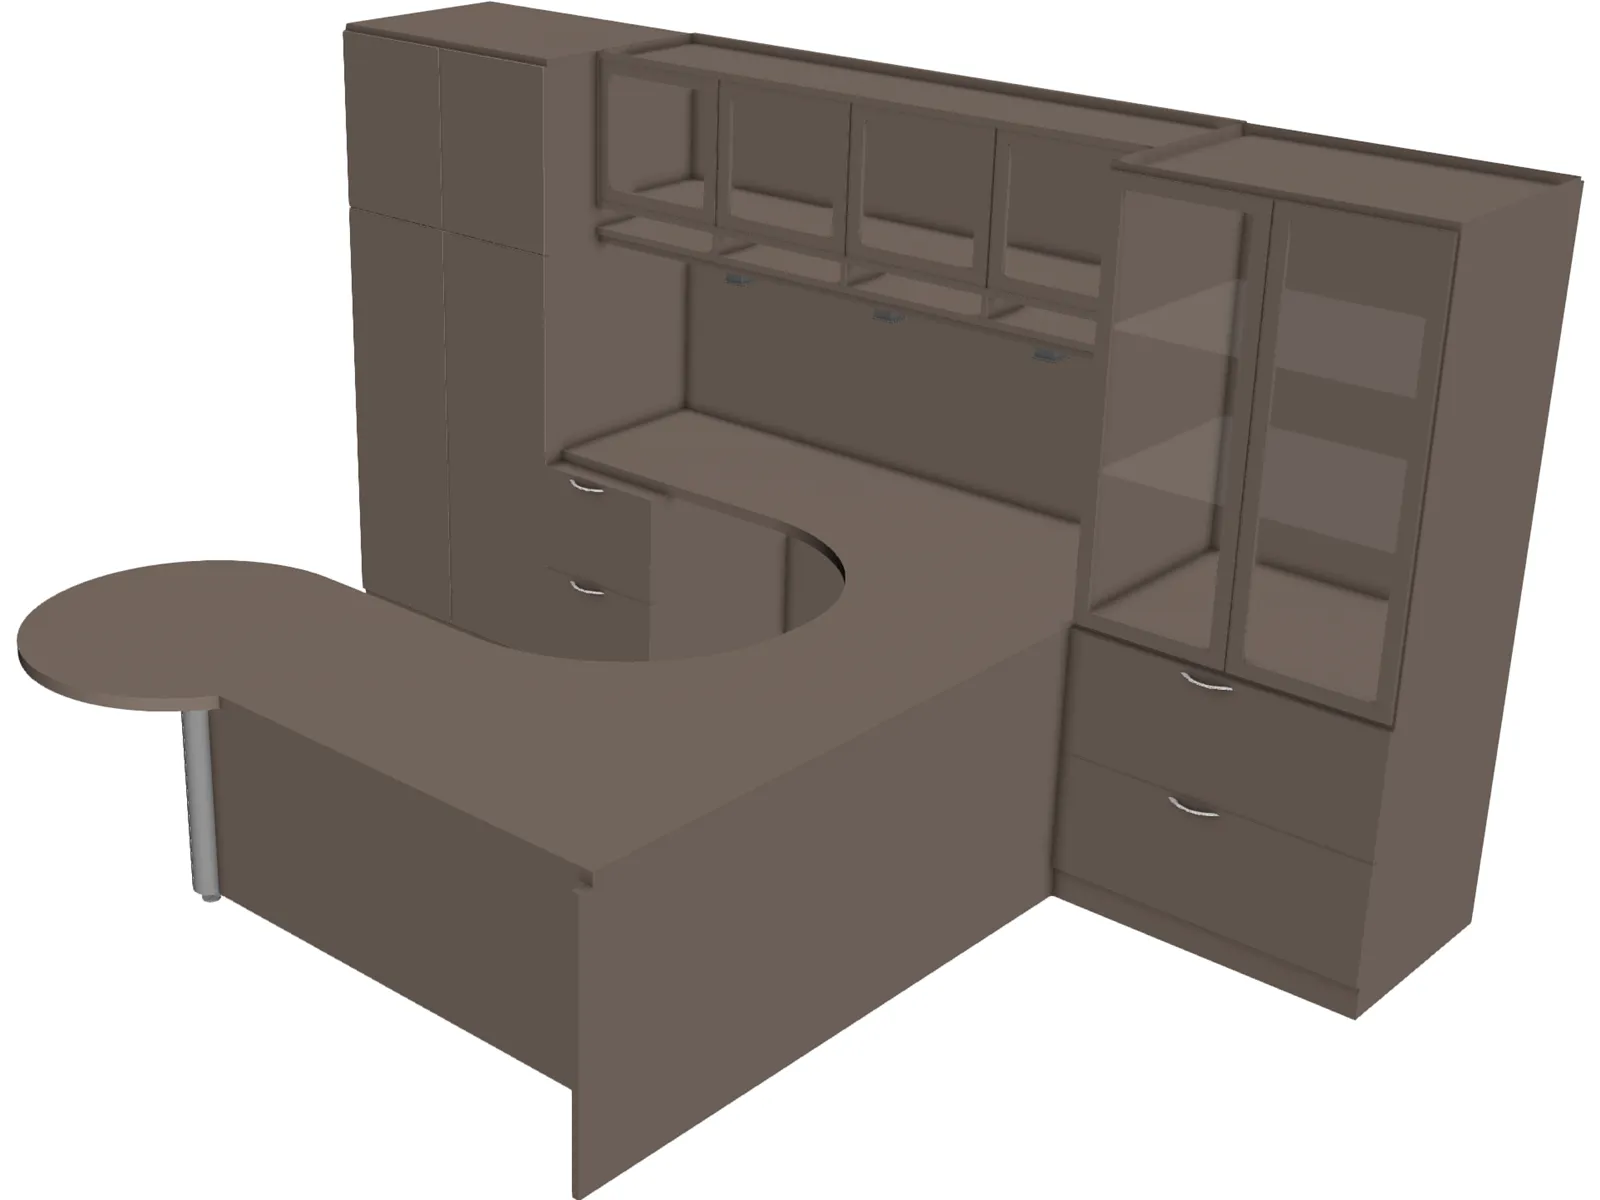 Executive Office Desk 3D Model